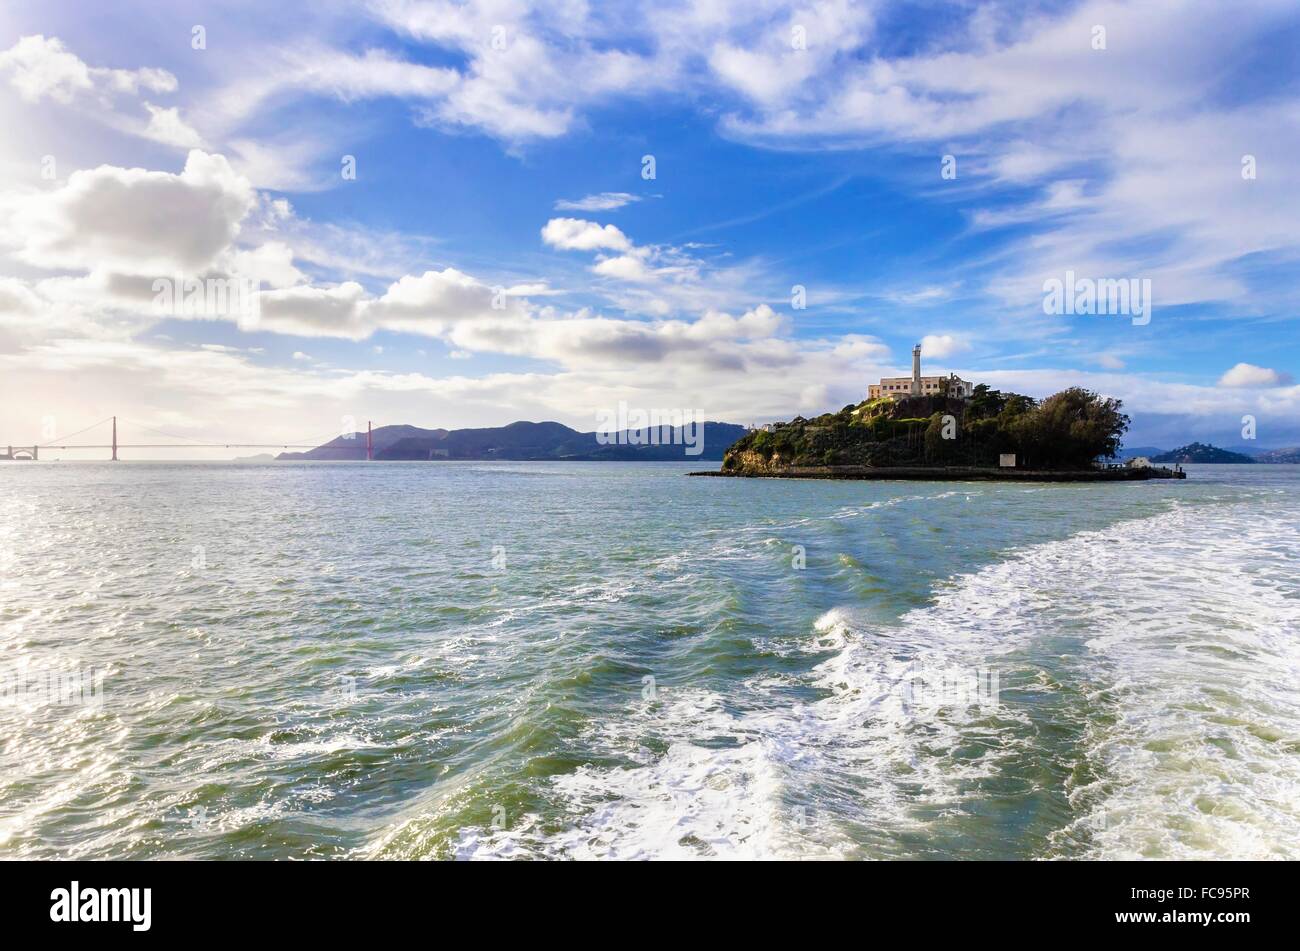 The Alcatraz Penitentiary, now a museum, and the Golden Gate bridge in San Francisco, California, United States of America. A vi Stock Photo